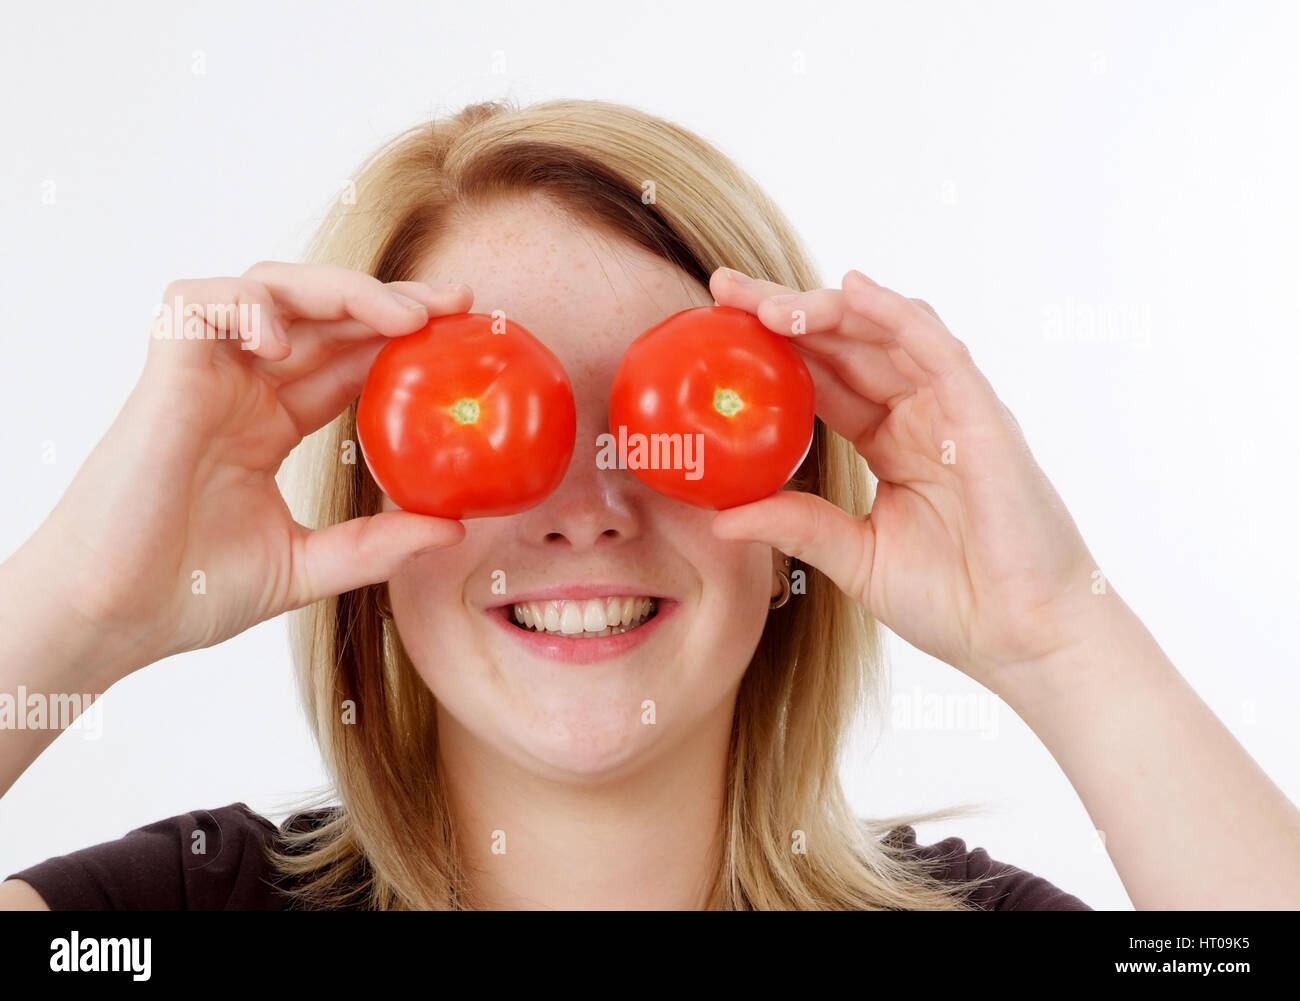 Junge Frau mit Tomaten auf den Augen - donna con pomodori, di essere ciechi per Foto Stock